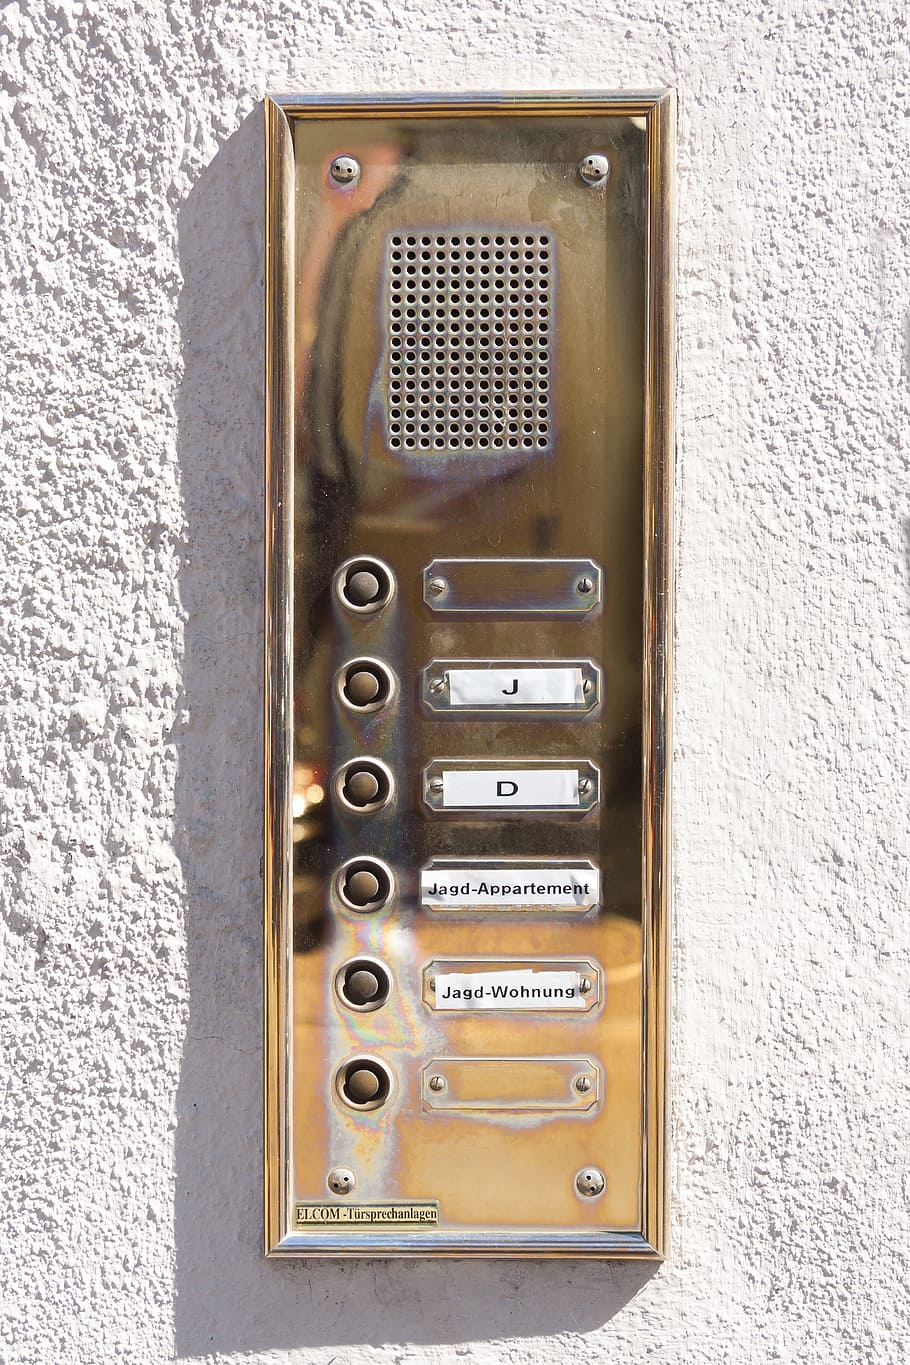 bell, intercom, house entrance, door bell, metal, brass, noble